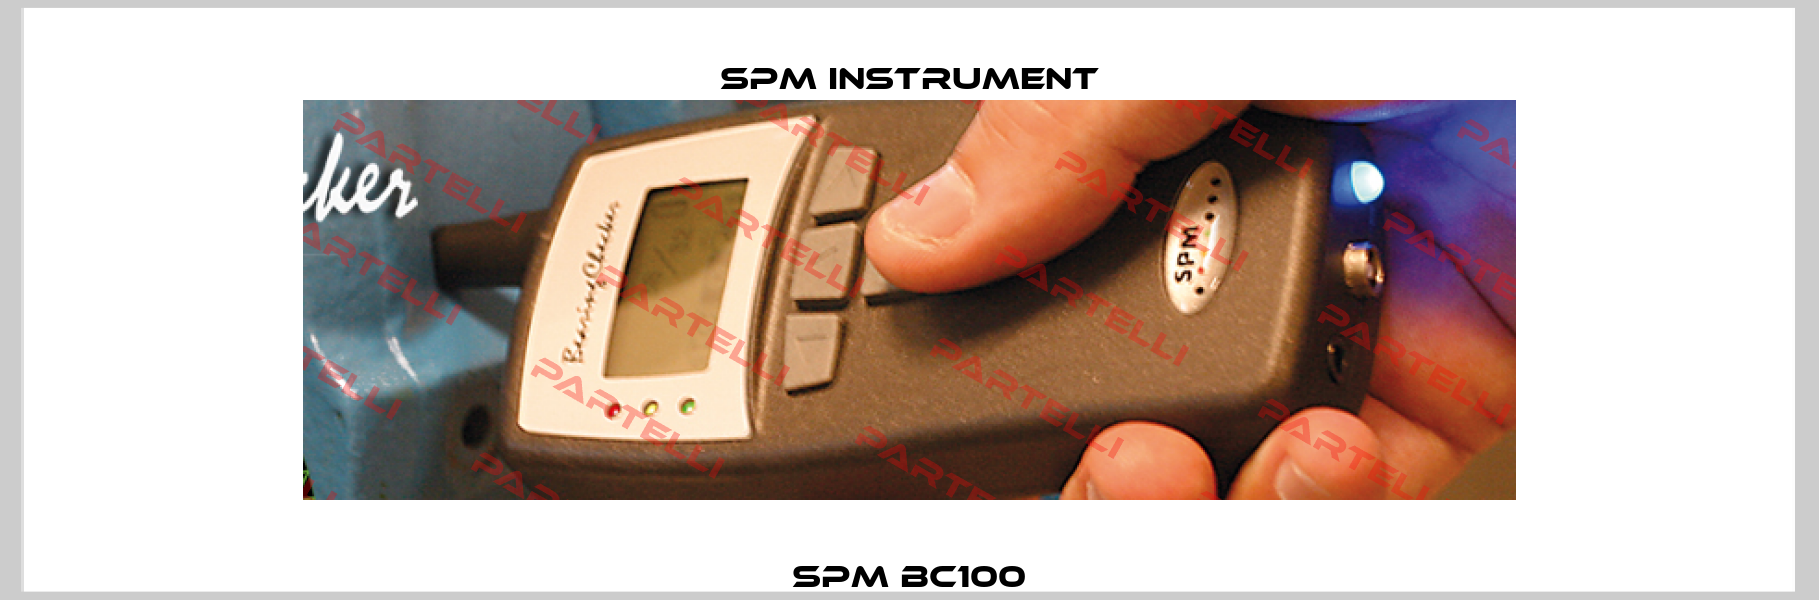 SPM BC100 SPM Instrument